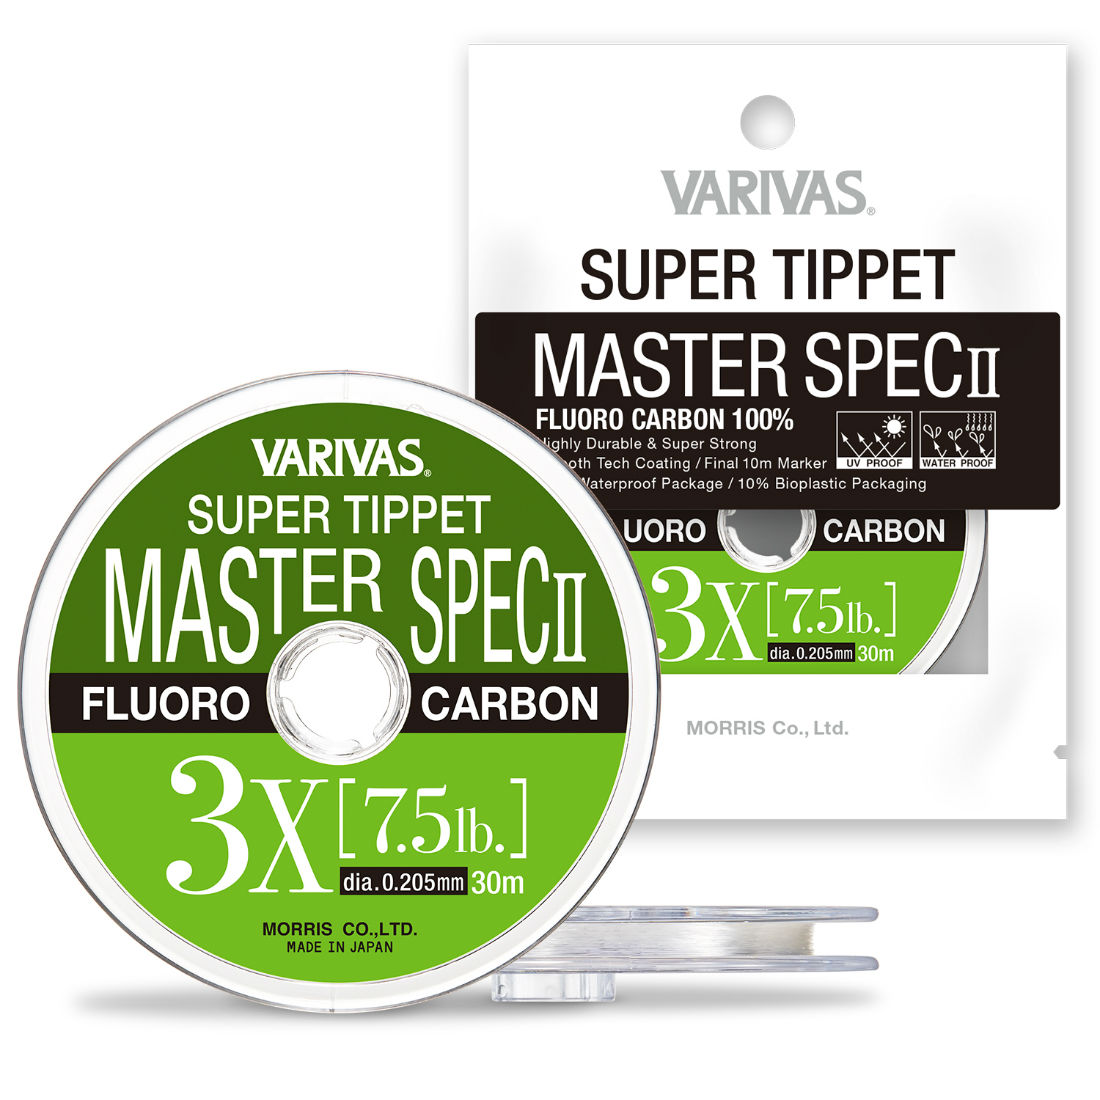 FIR VARIVAS SUPER TIPPET MASTER SPEC ll FLUORO 4X 30m 0.165mm 5.1lb